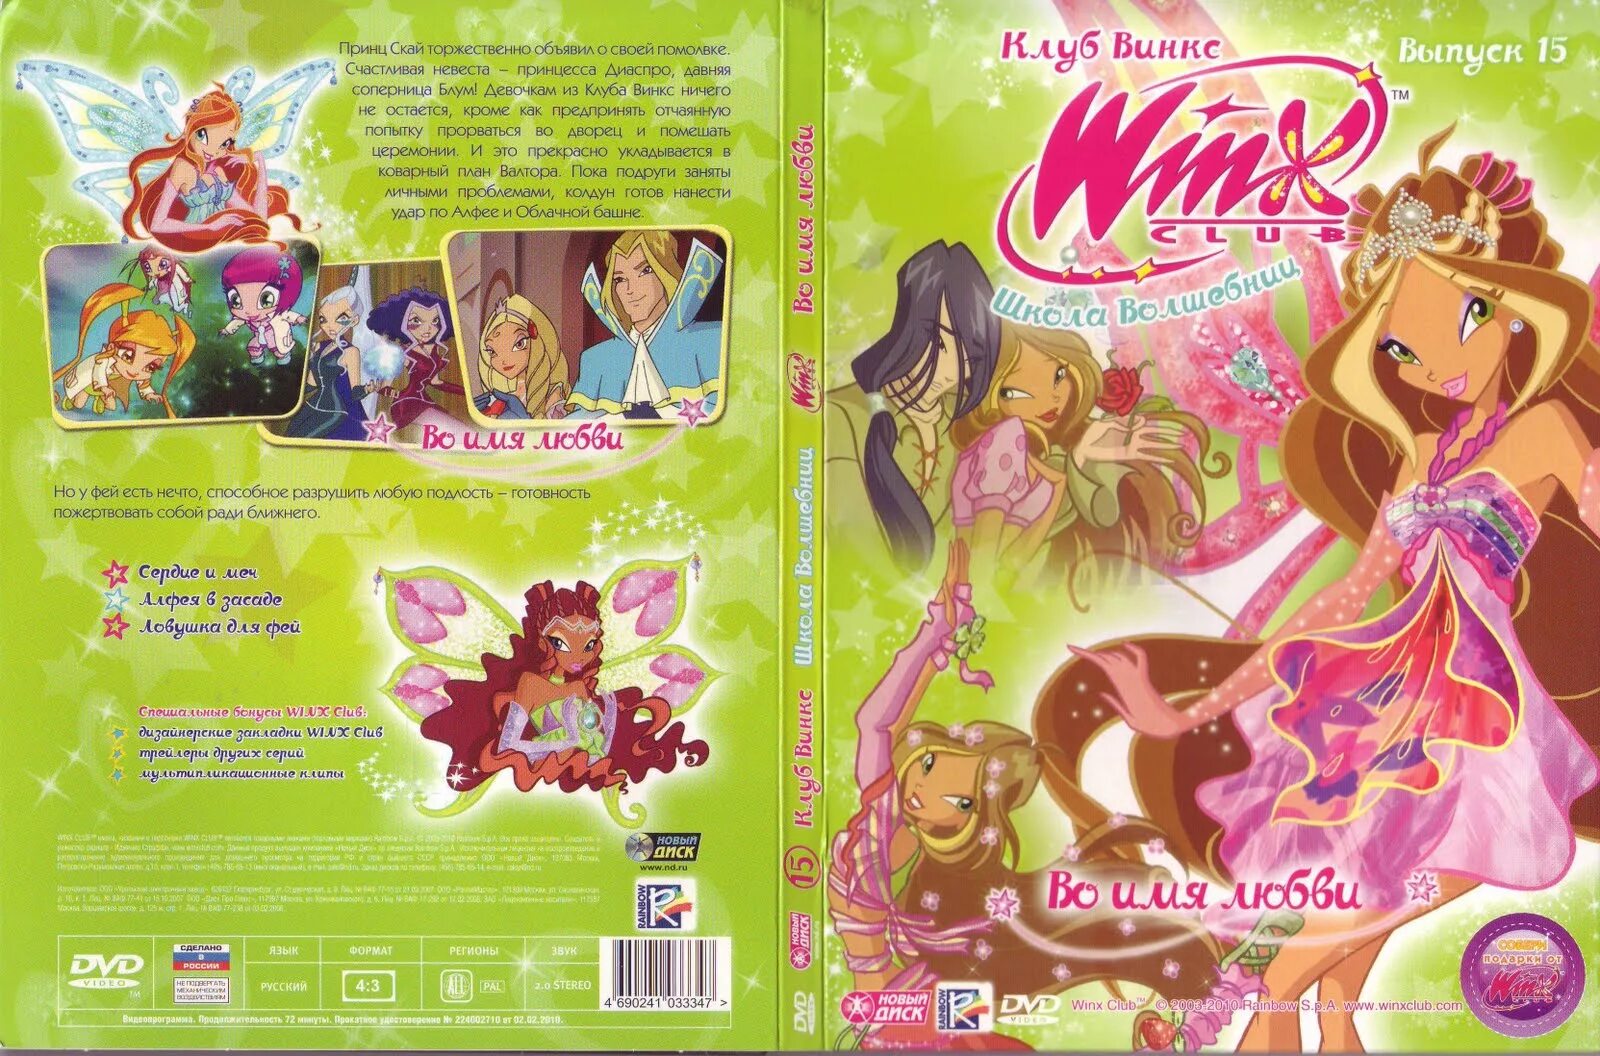 Диски винкс школа волшебниц. Winx Club DVD диск 3 выпуск. Двд диски Винкс 22 выпуск. Клуб Винкс DVD. DVD клуб Винкс выпуск 15.